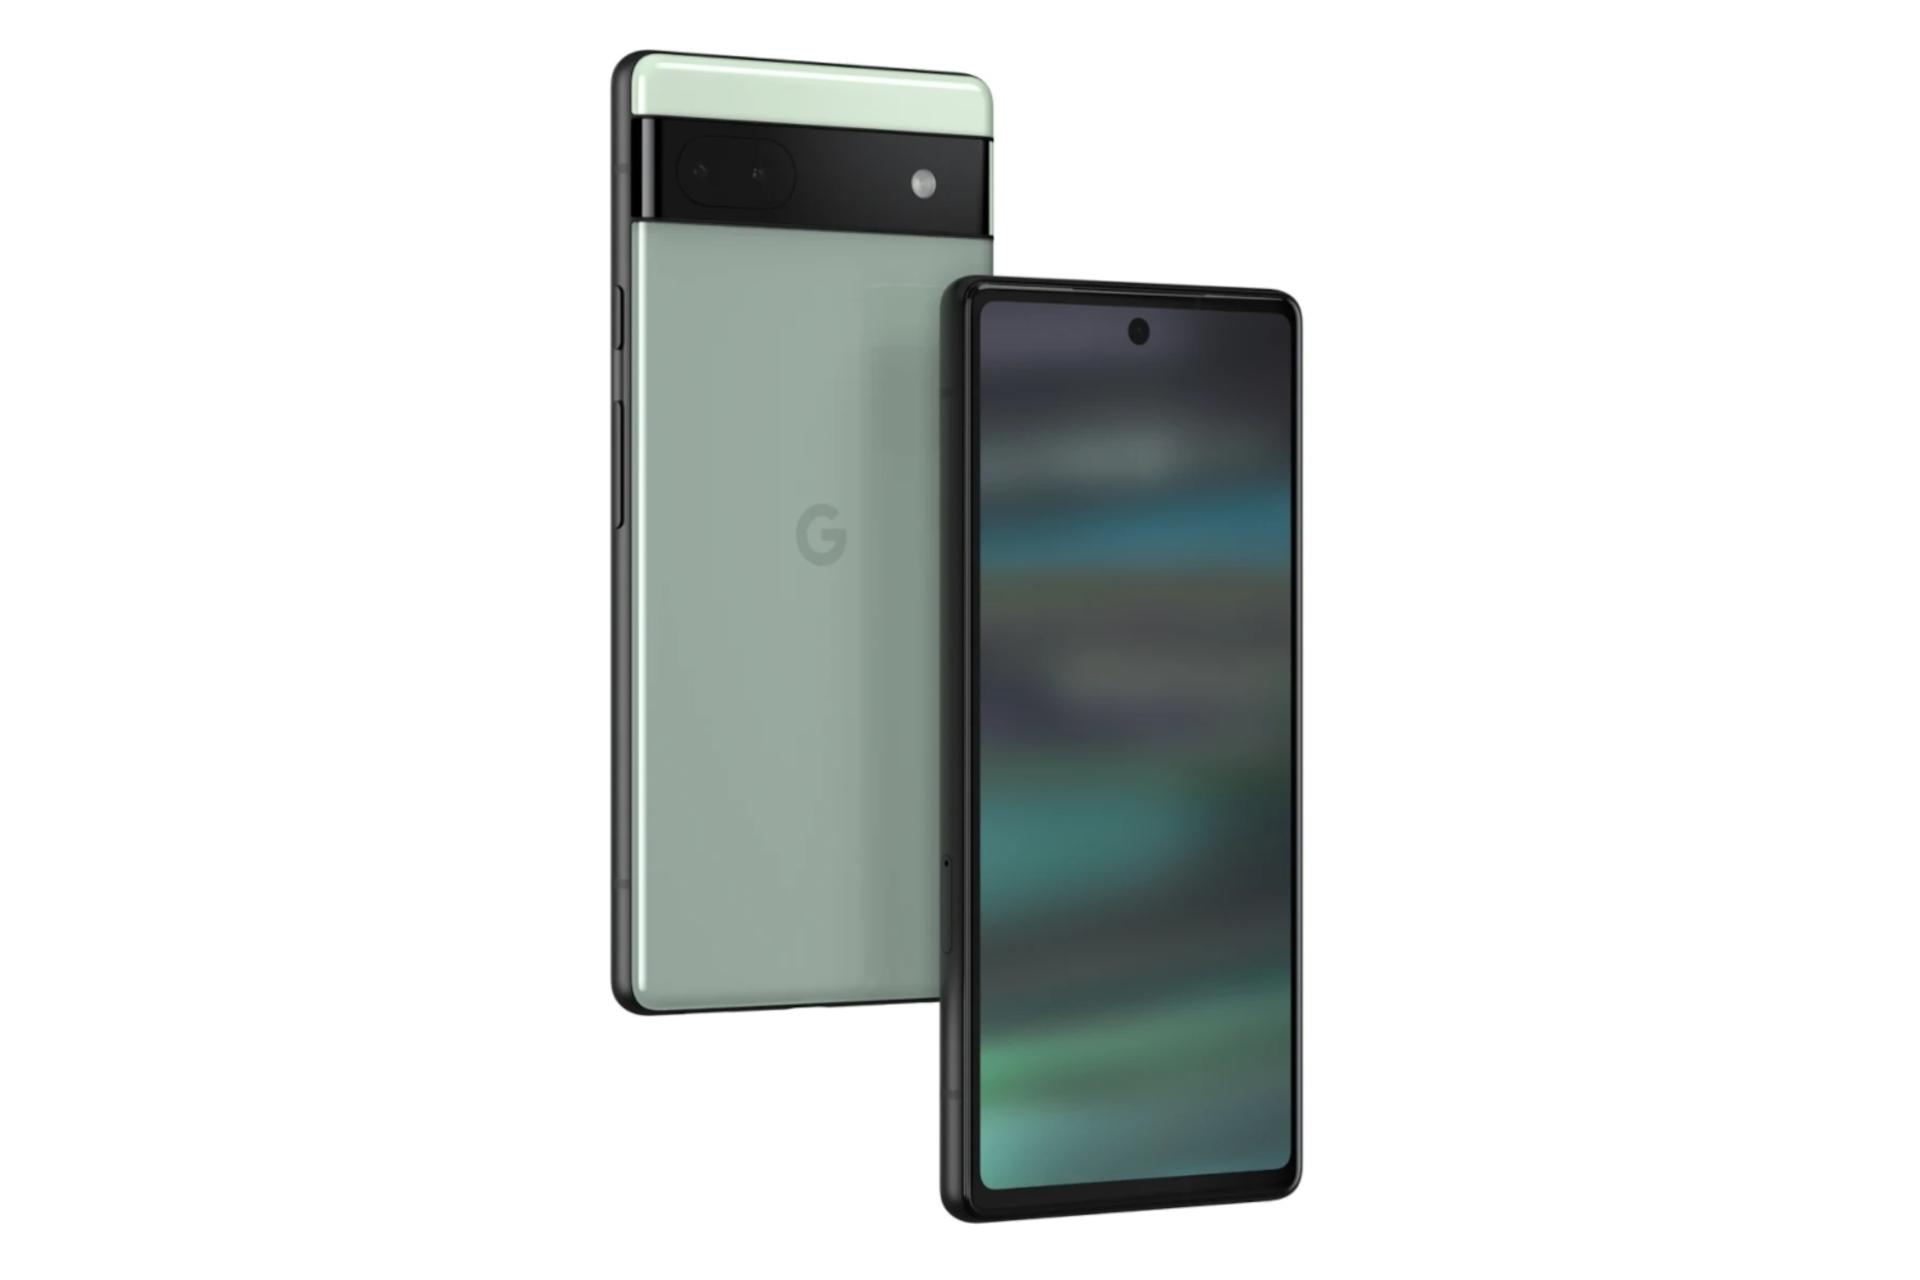 گوشی موبایل پیکسل 6a گوگل / Google Pixel 6a سبز